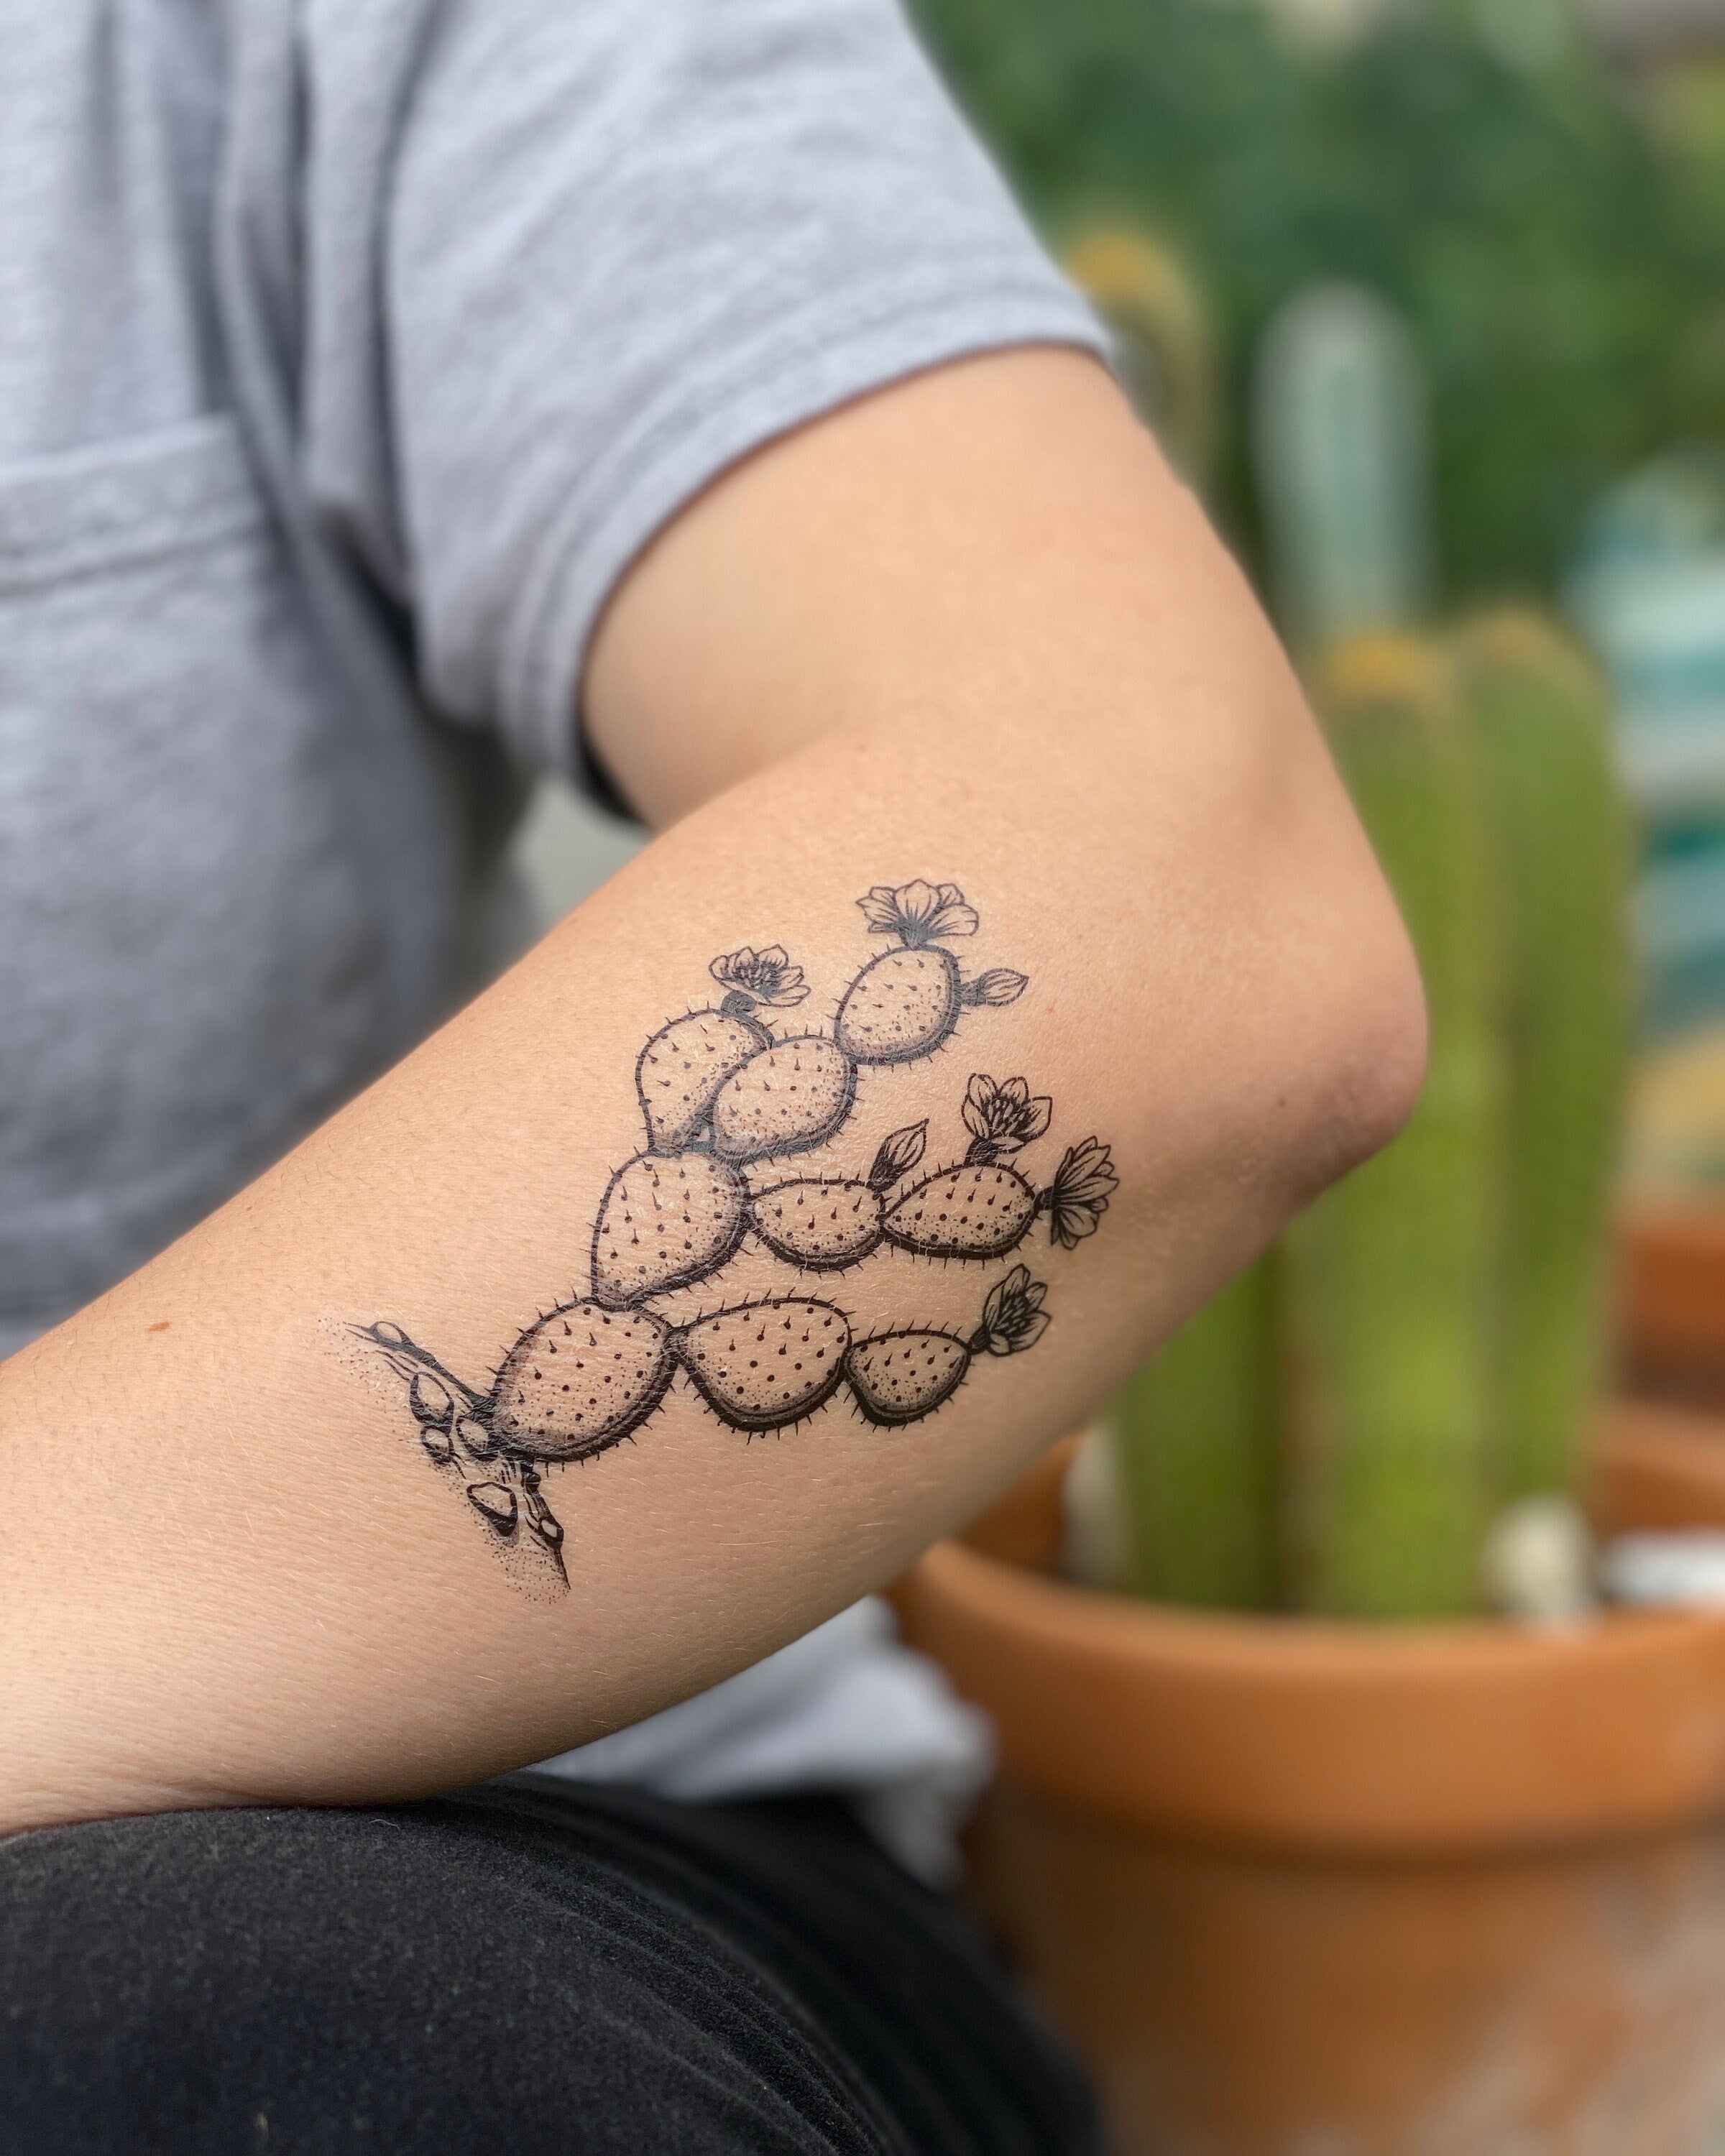 Flower Cactus tattoo by Wonderland Tattoos  Best Tattoo Ideas Gallery